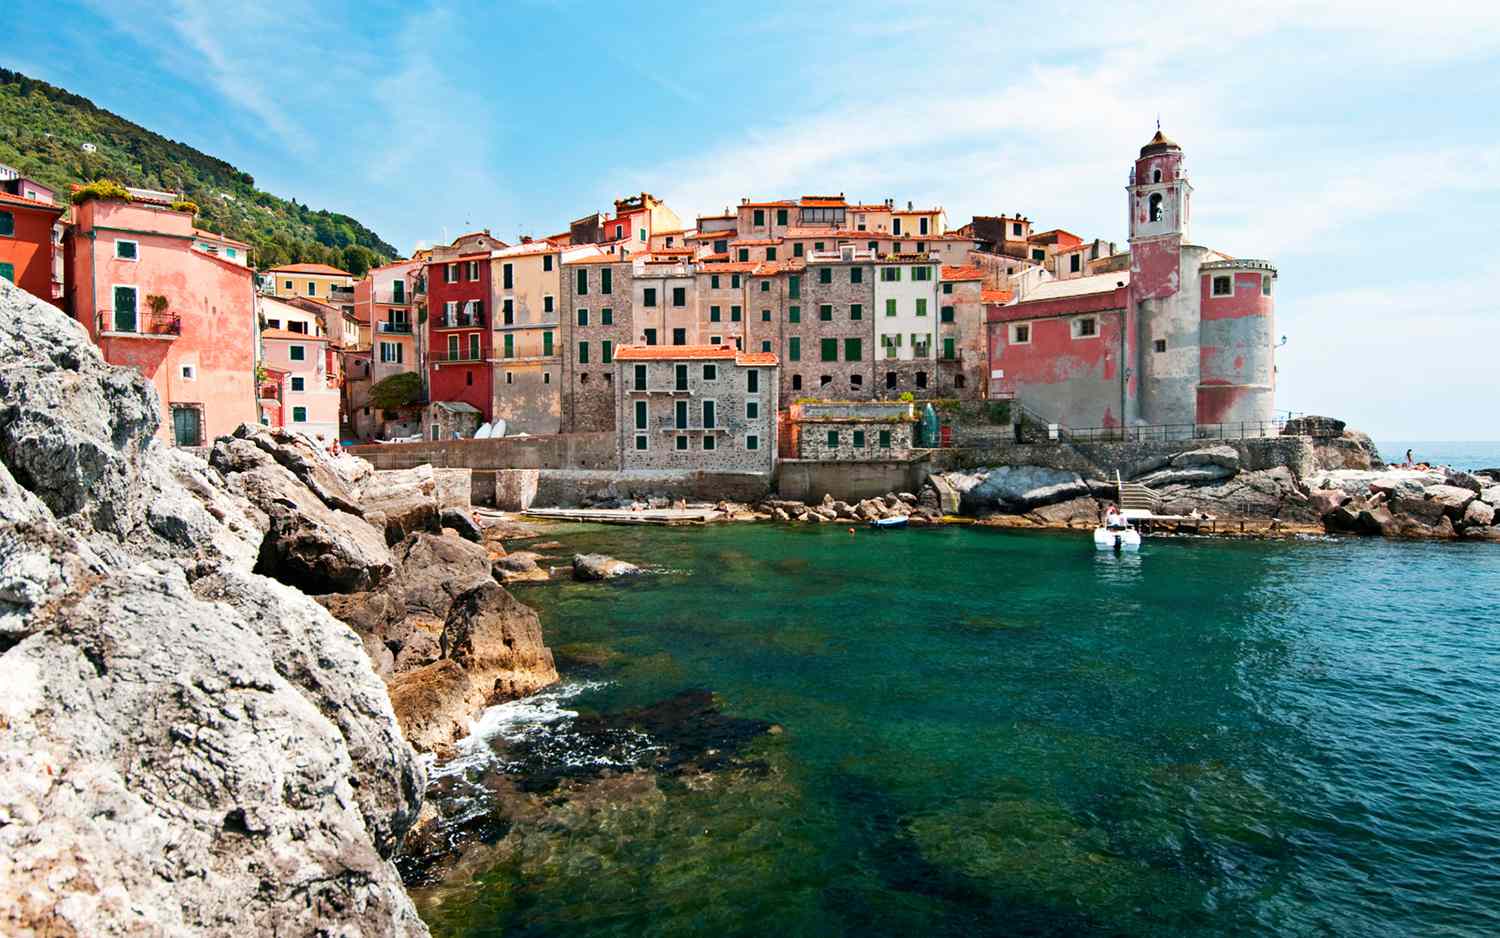 Europe's Most Beautiful Villages: Tellaro, Italy